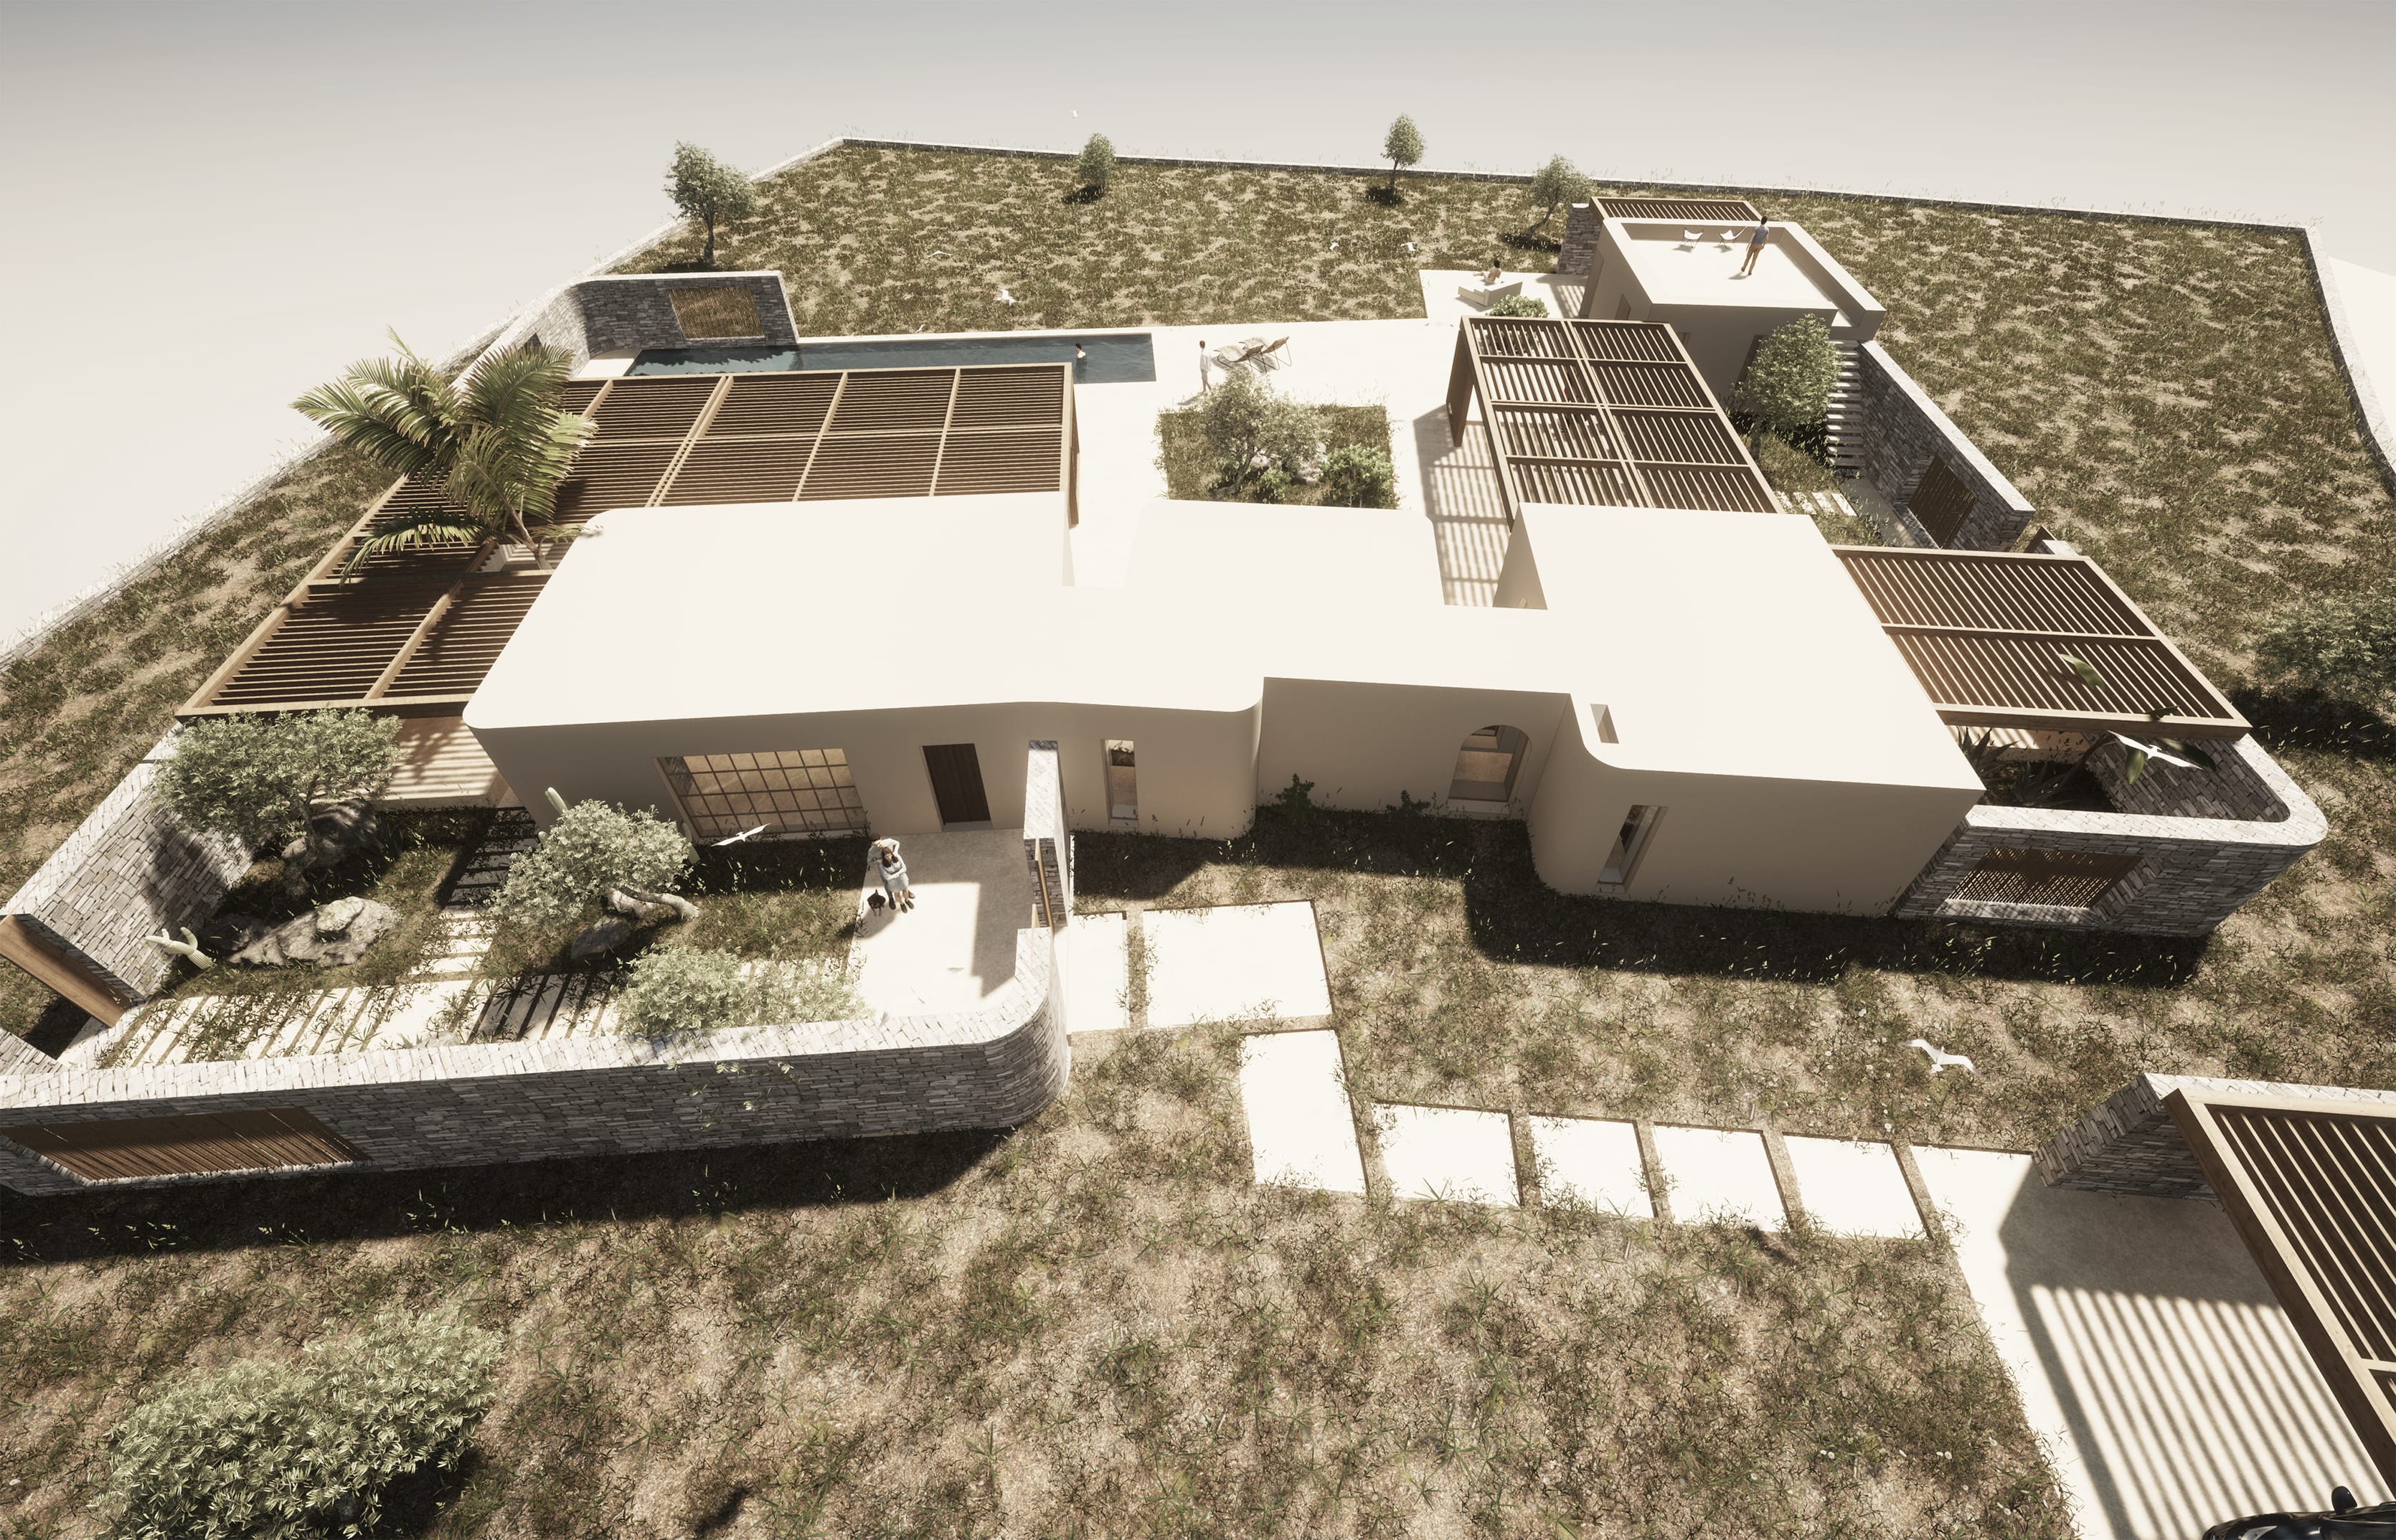 Evripiotis Architects--House in Limnes #1, Paros Island